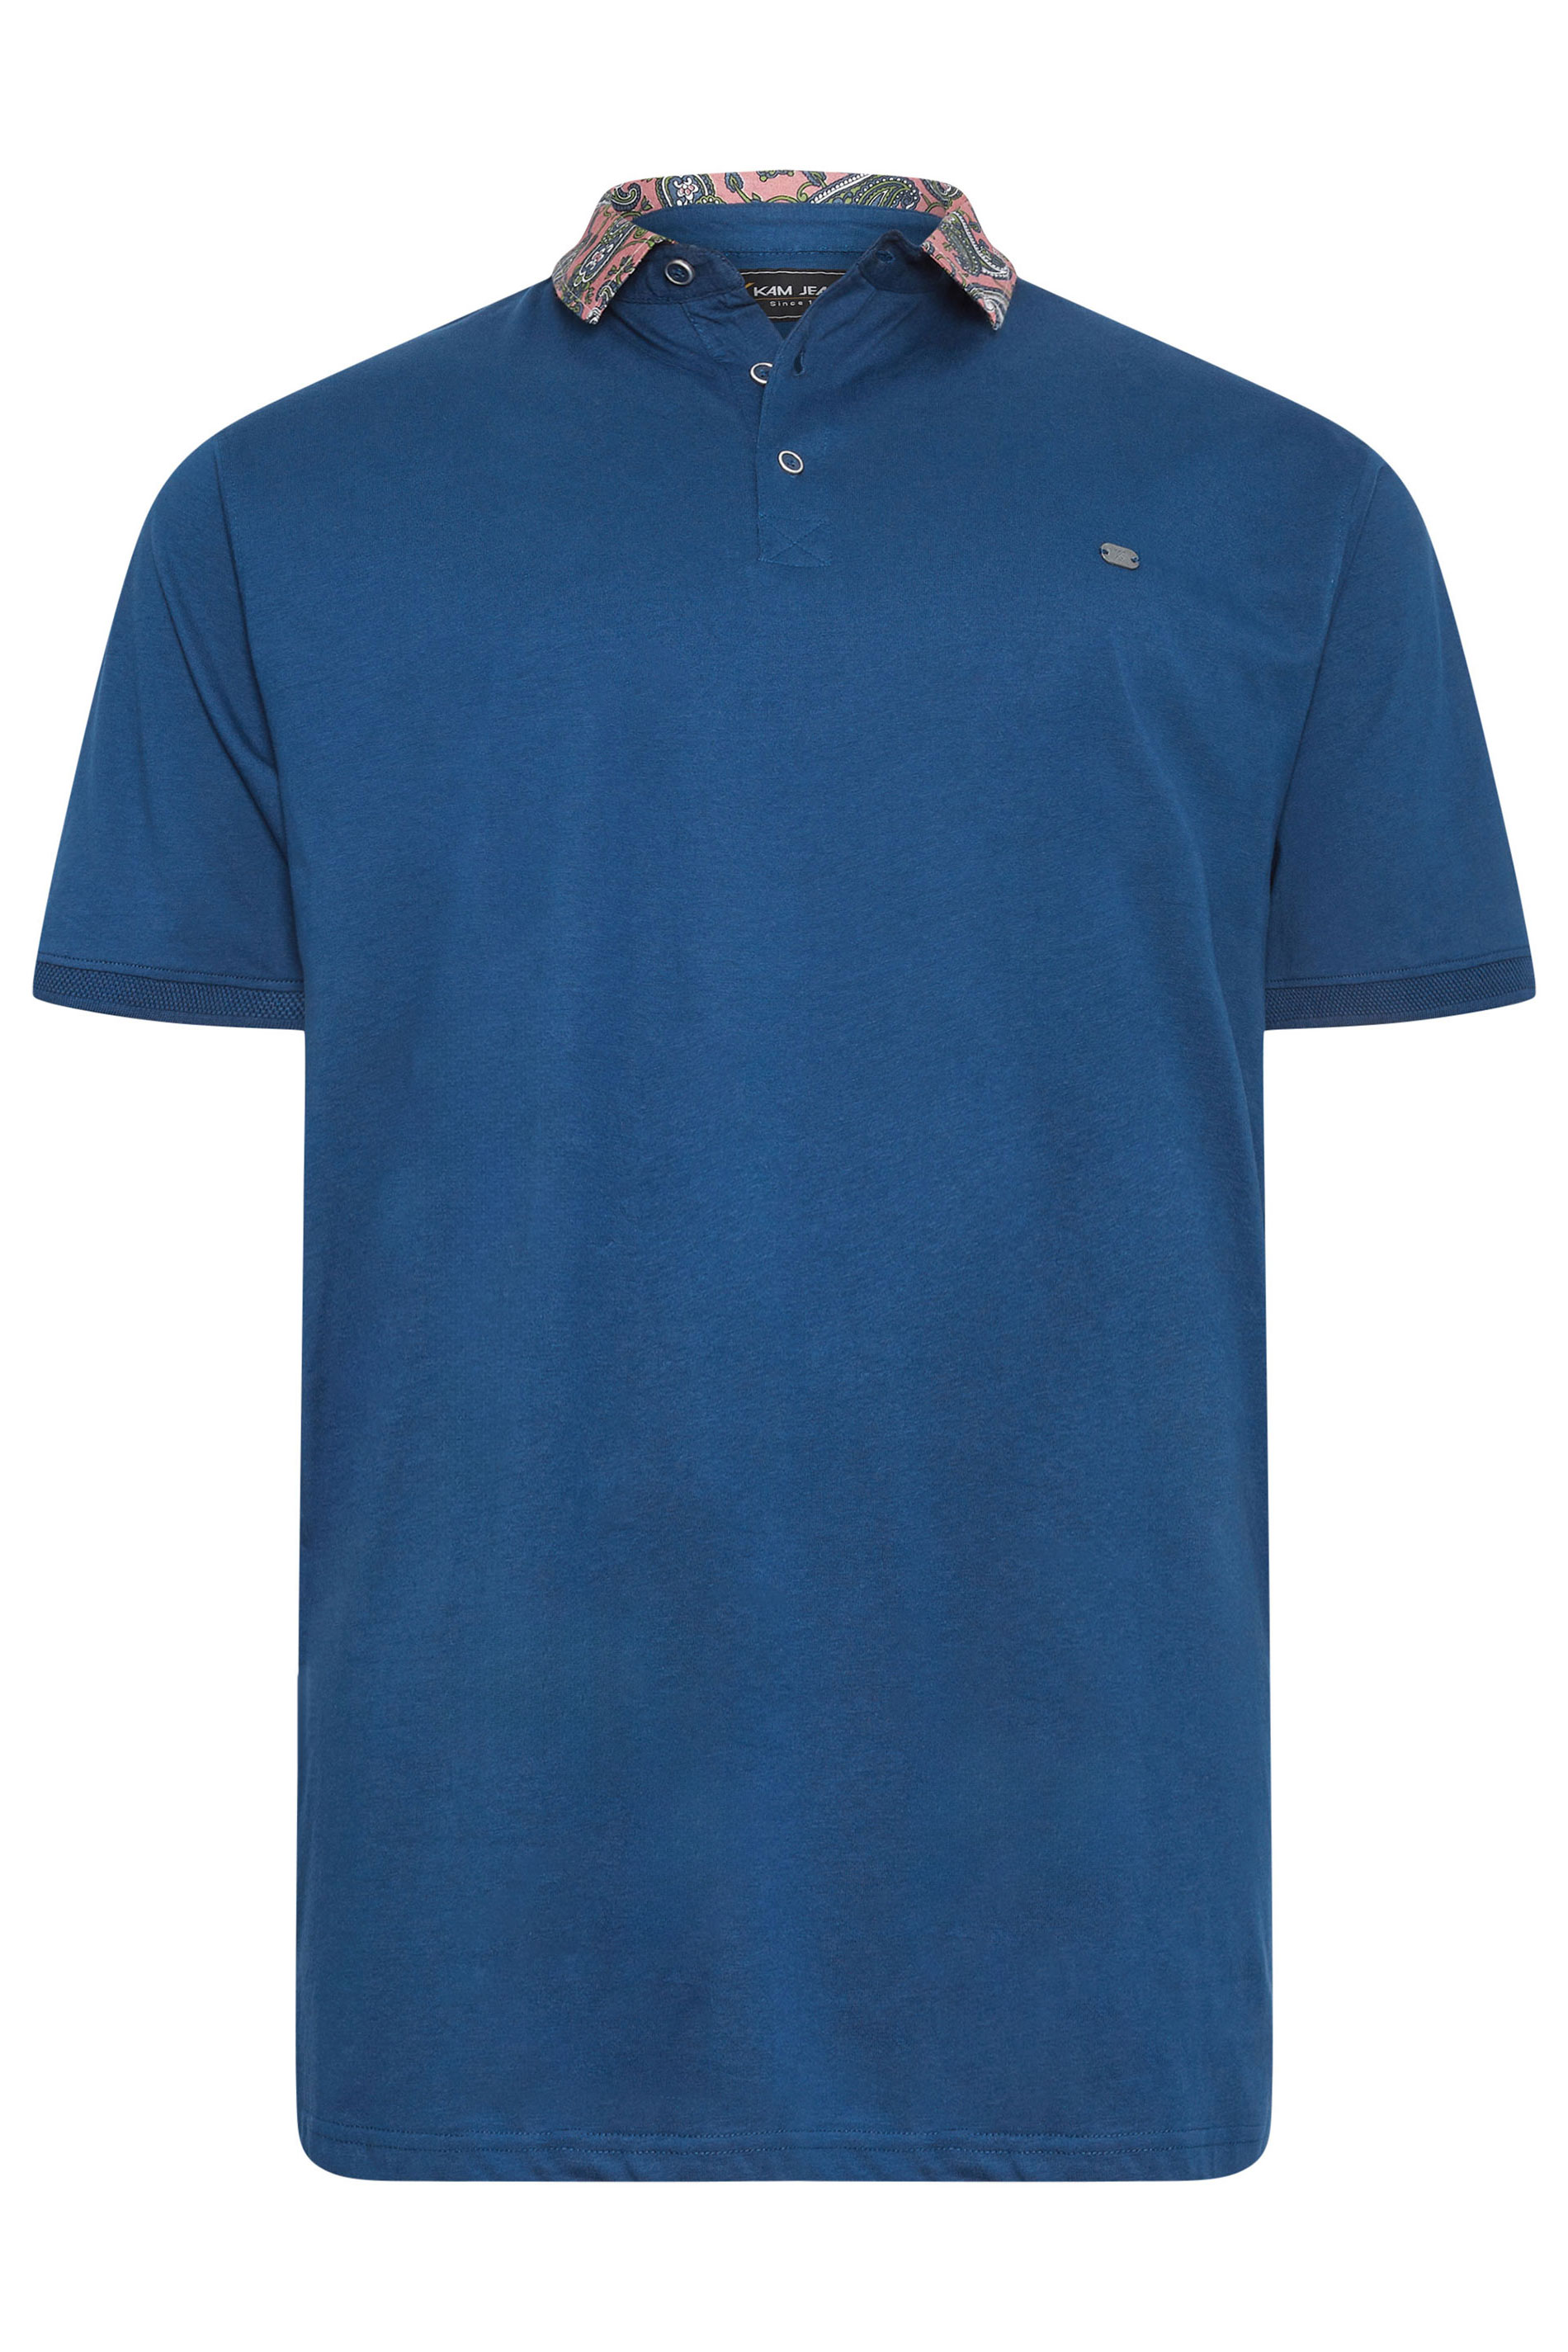 KAM Big & Tall Blue Jersey Floral Collar Polo Shirt | BadRhino